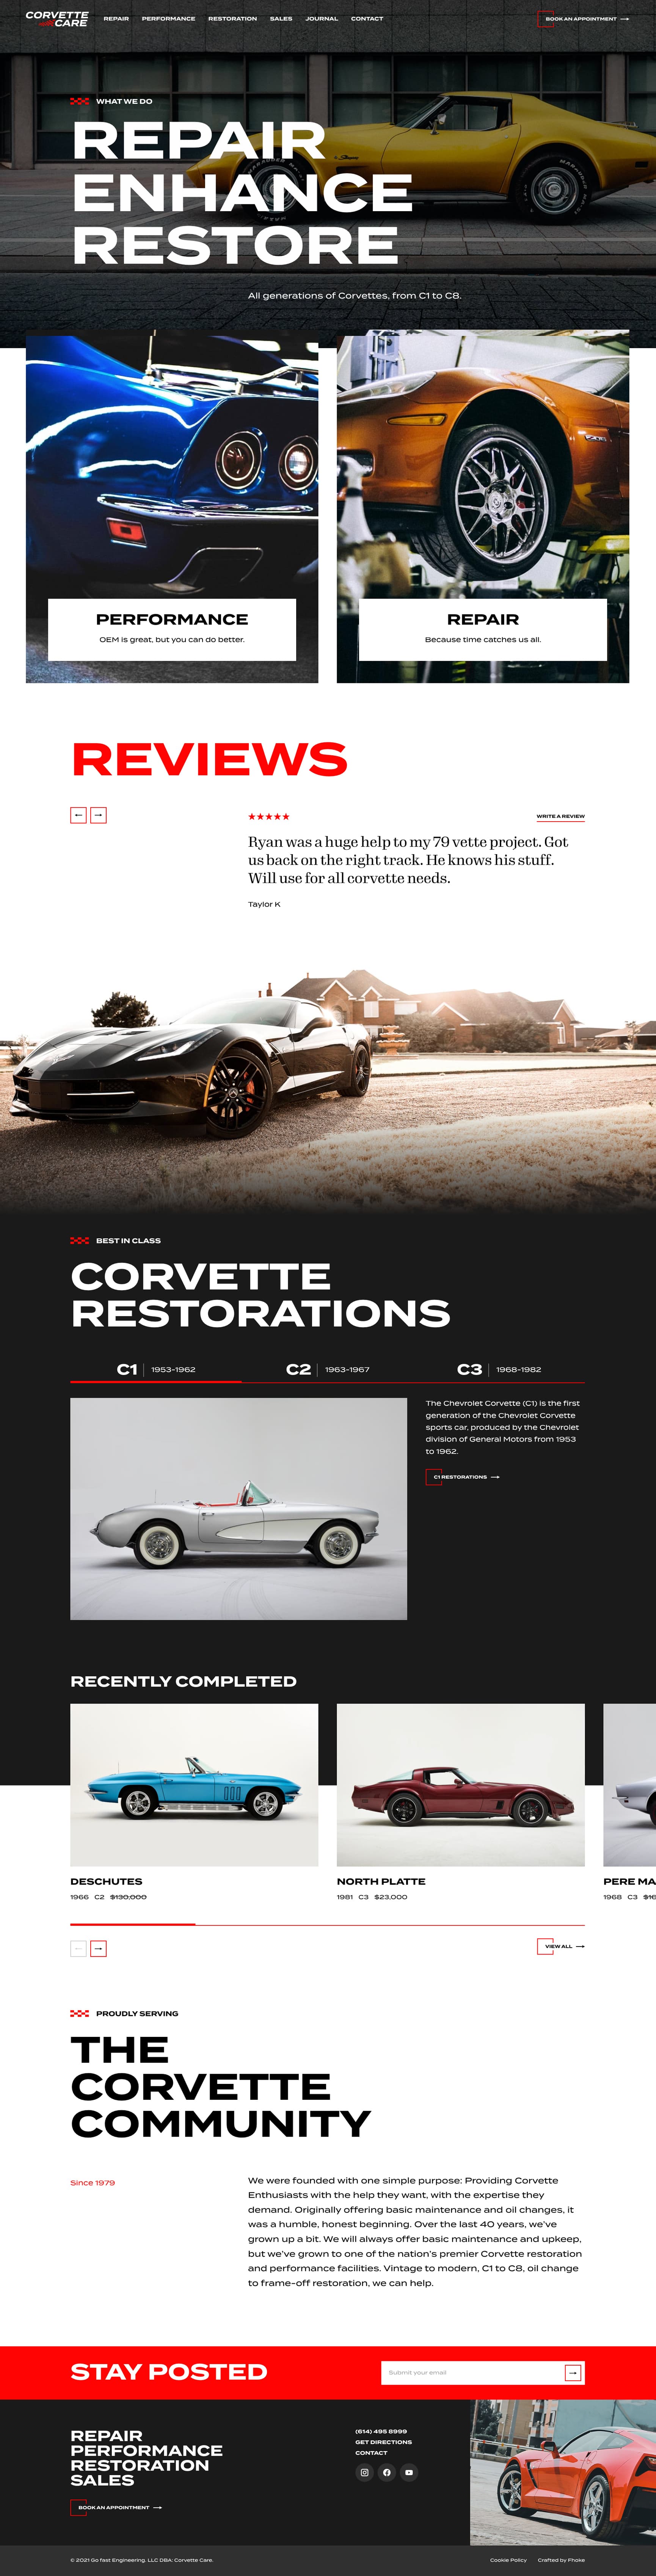 Corvette Care Website Design